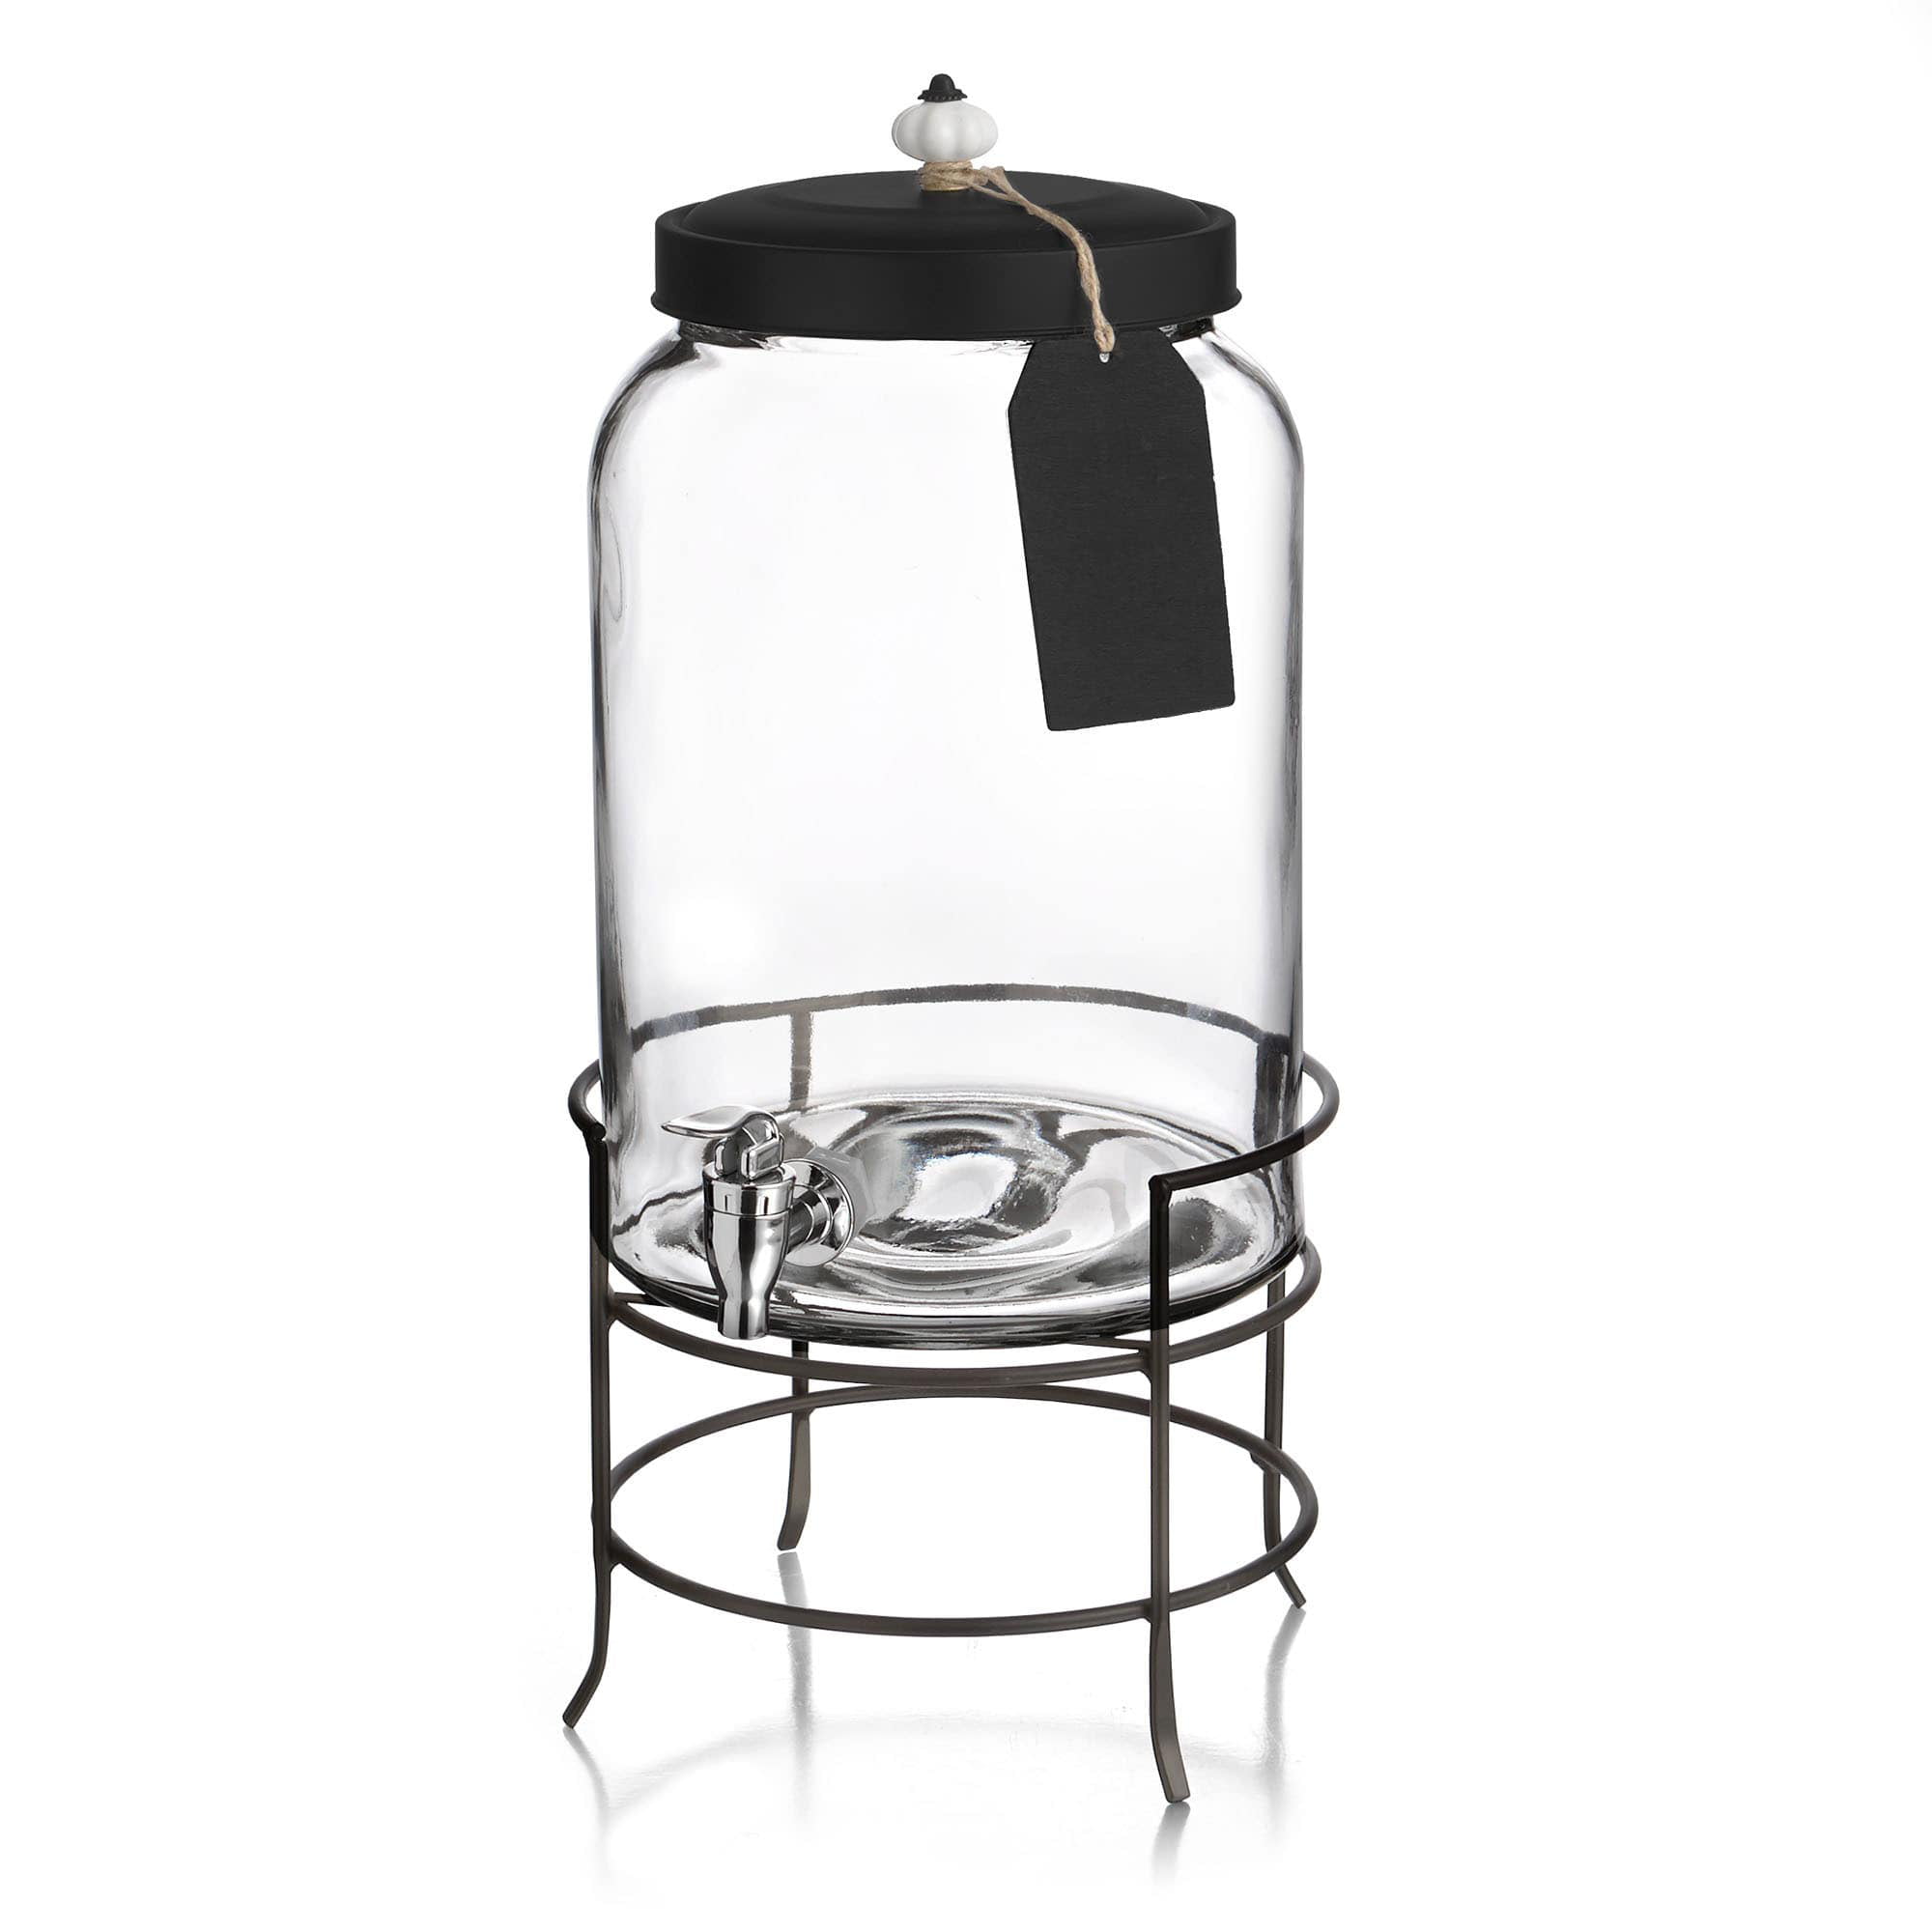 Decorative Glass Pedestal Beverage Dispenser with Stainless Steel Spig –  Kitchentoolz